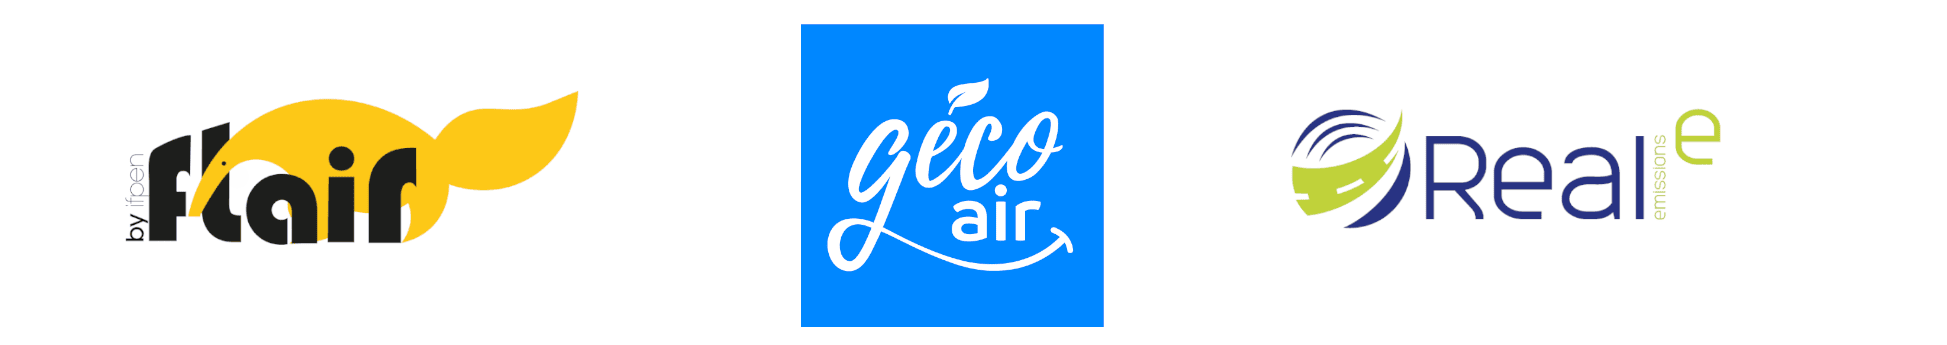 Logos Flair, Géco Air et Real-e